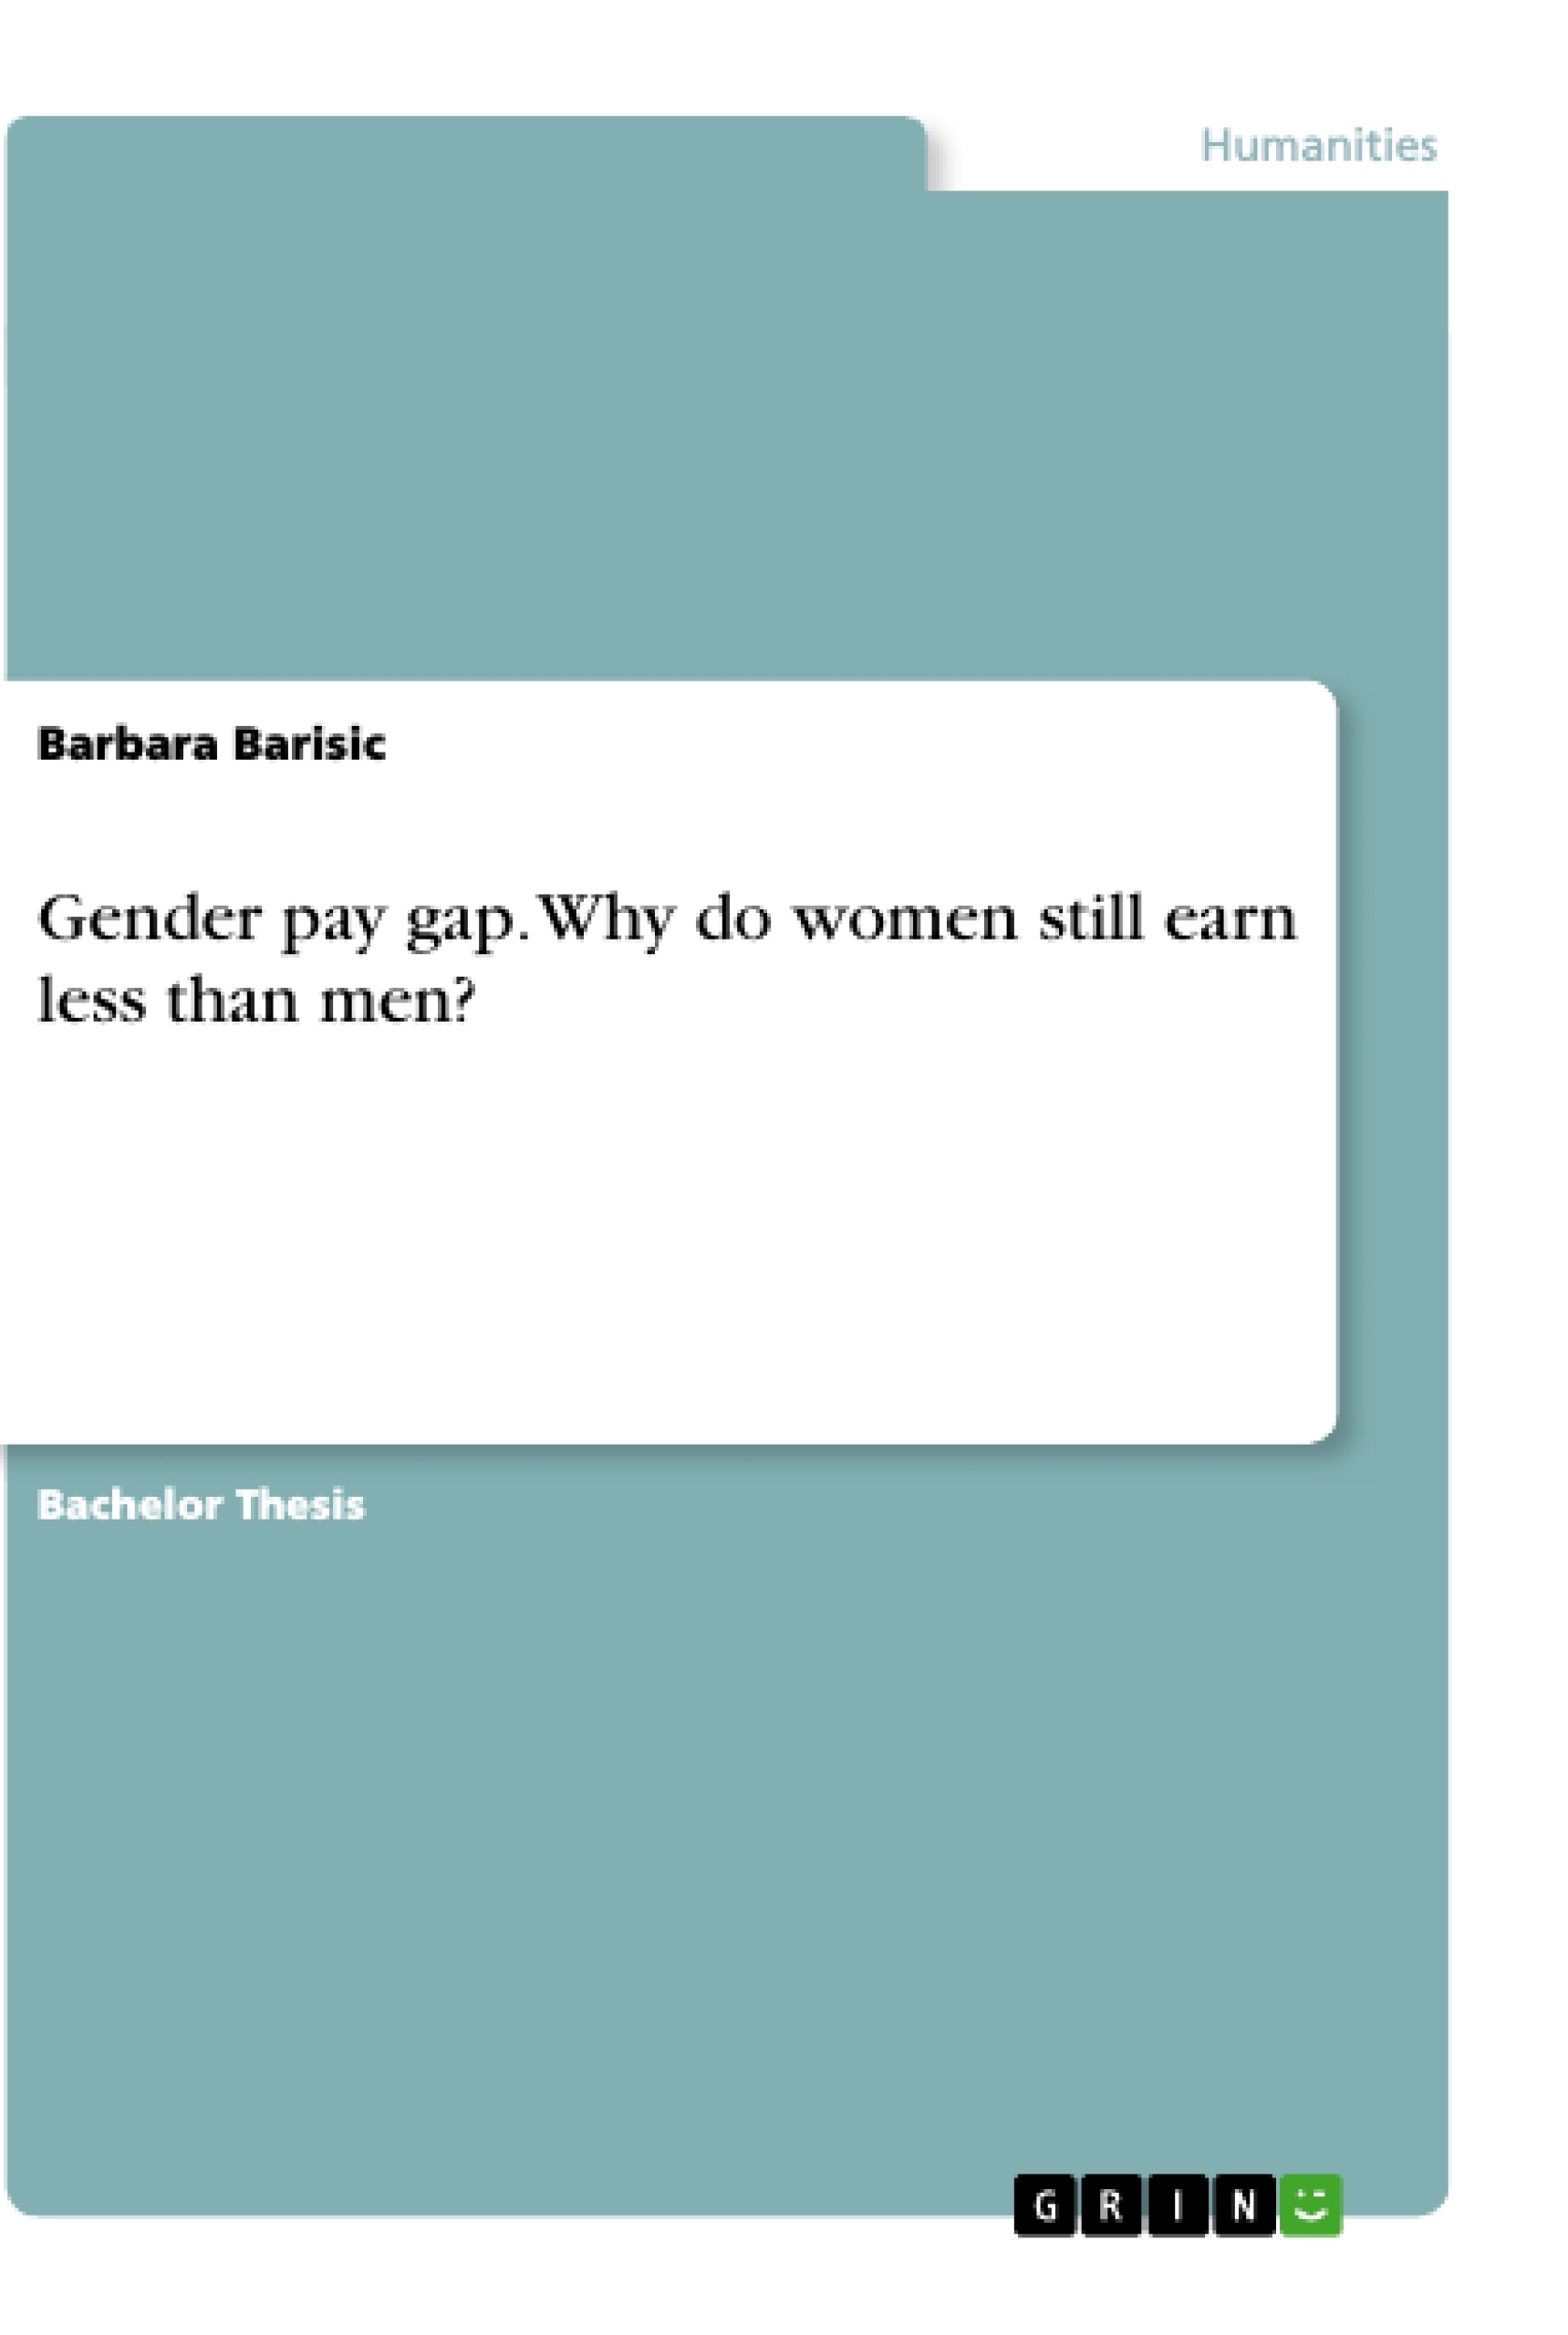 Title: Gender pay gap. Why do women still earn less than men?